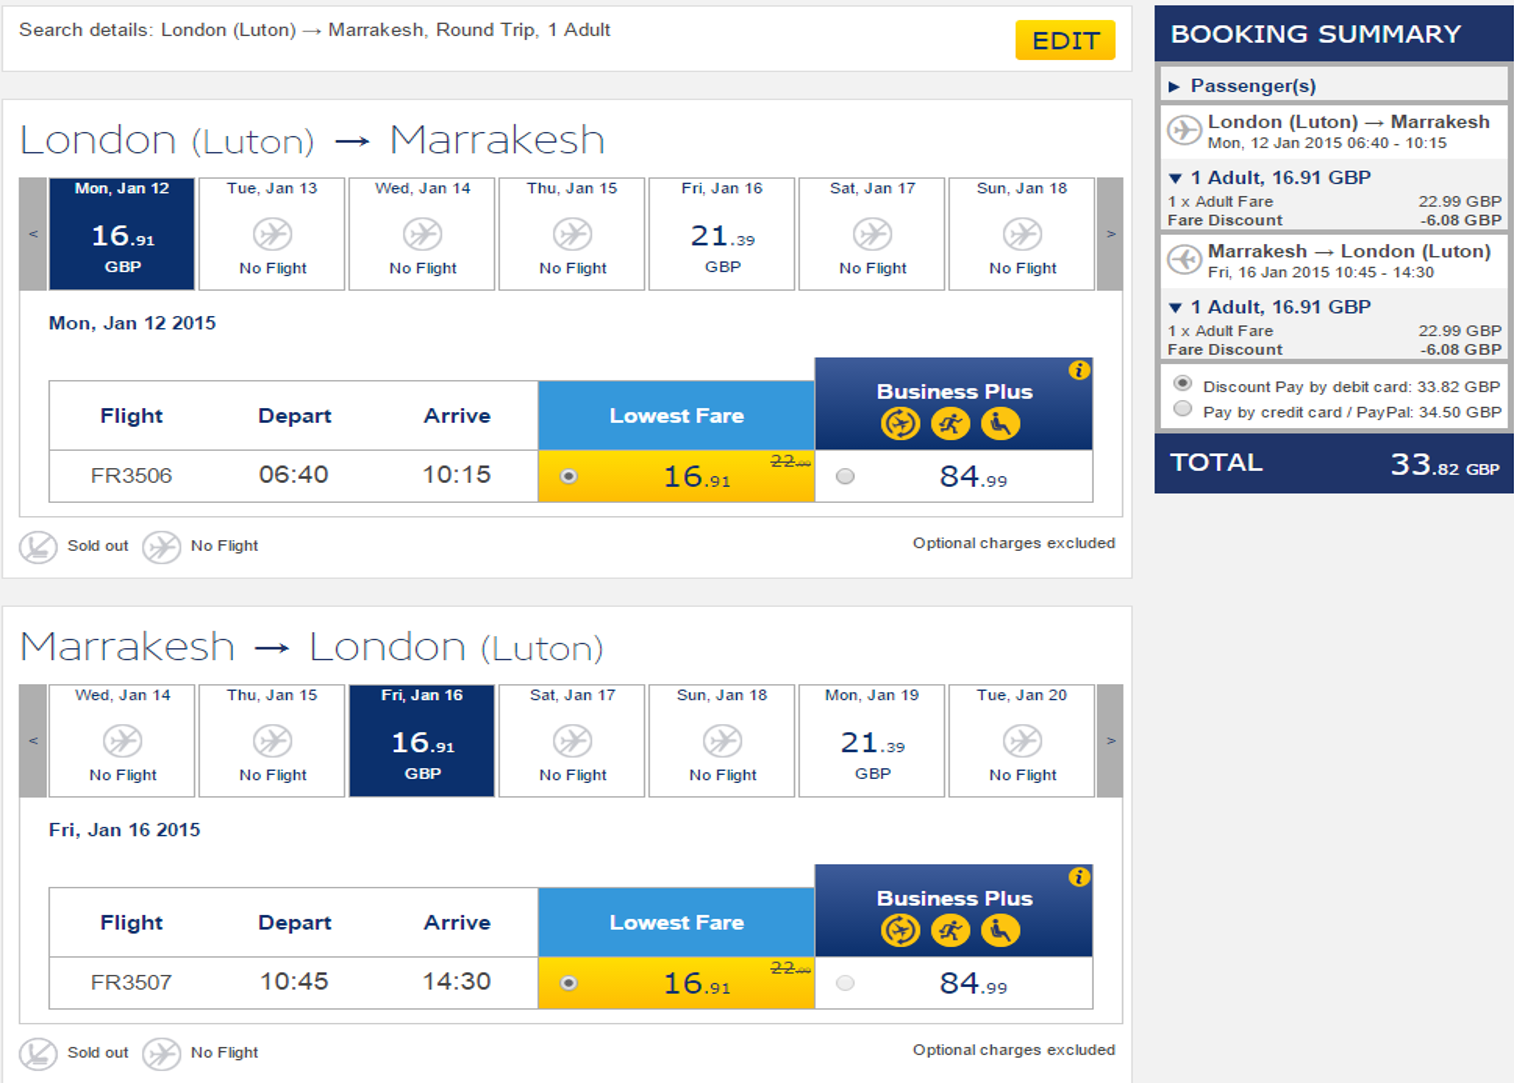 Return flights to Marrakech £33.82